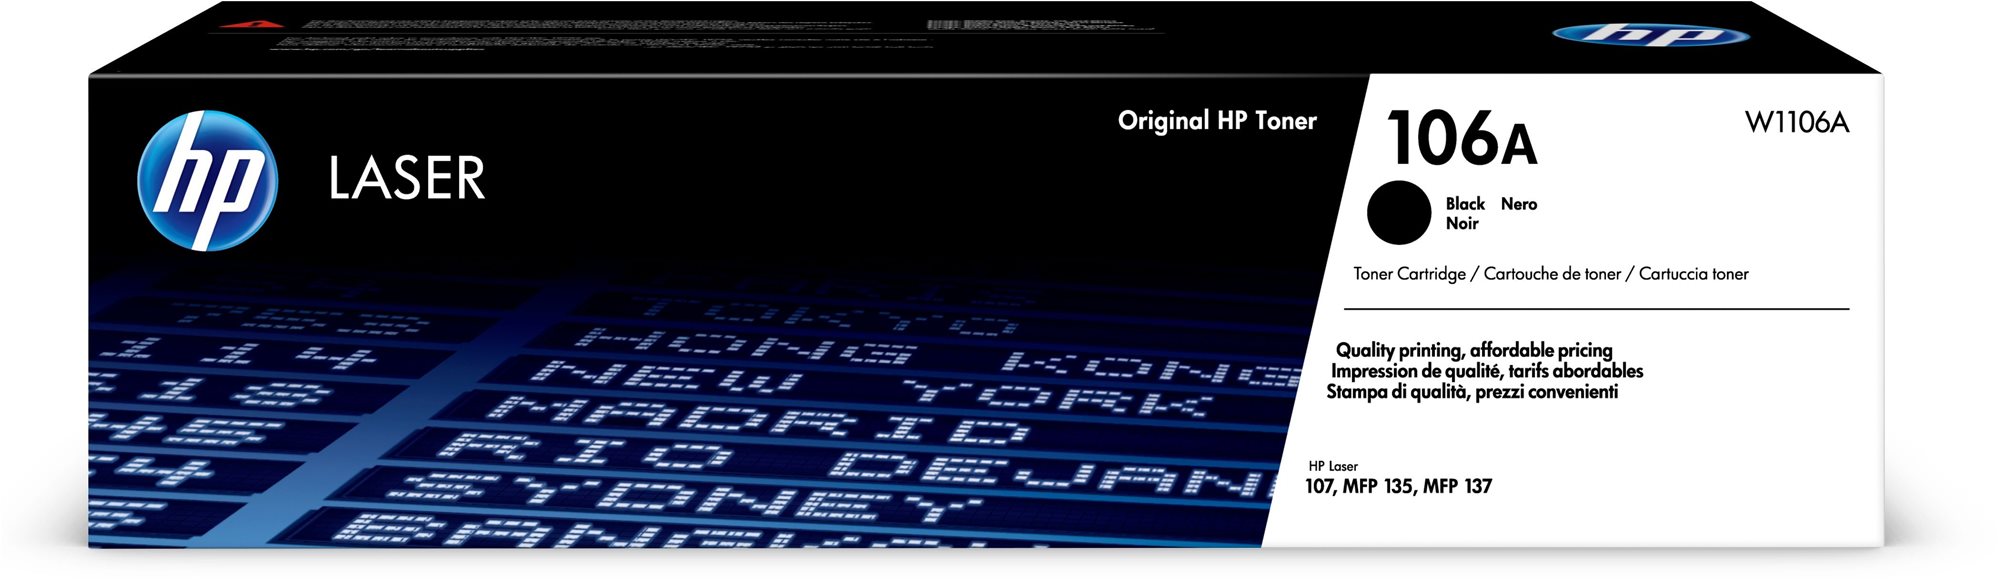 HP W1106A sz. 106A eredeti fekete